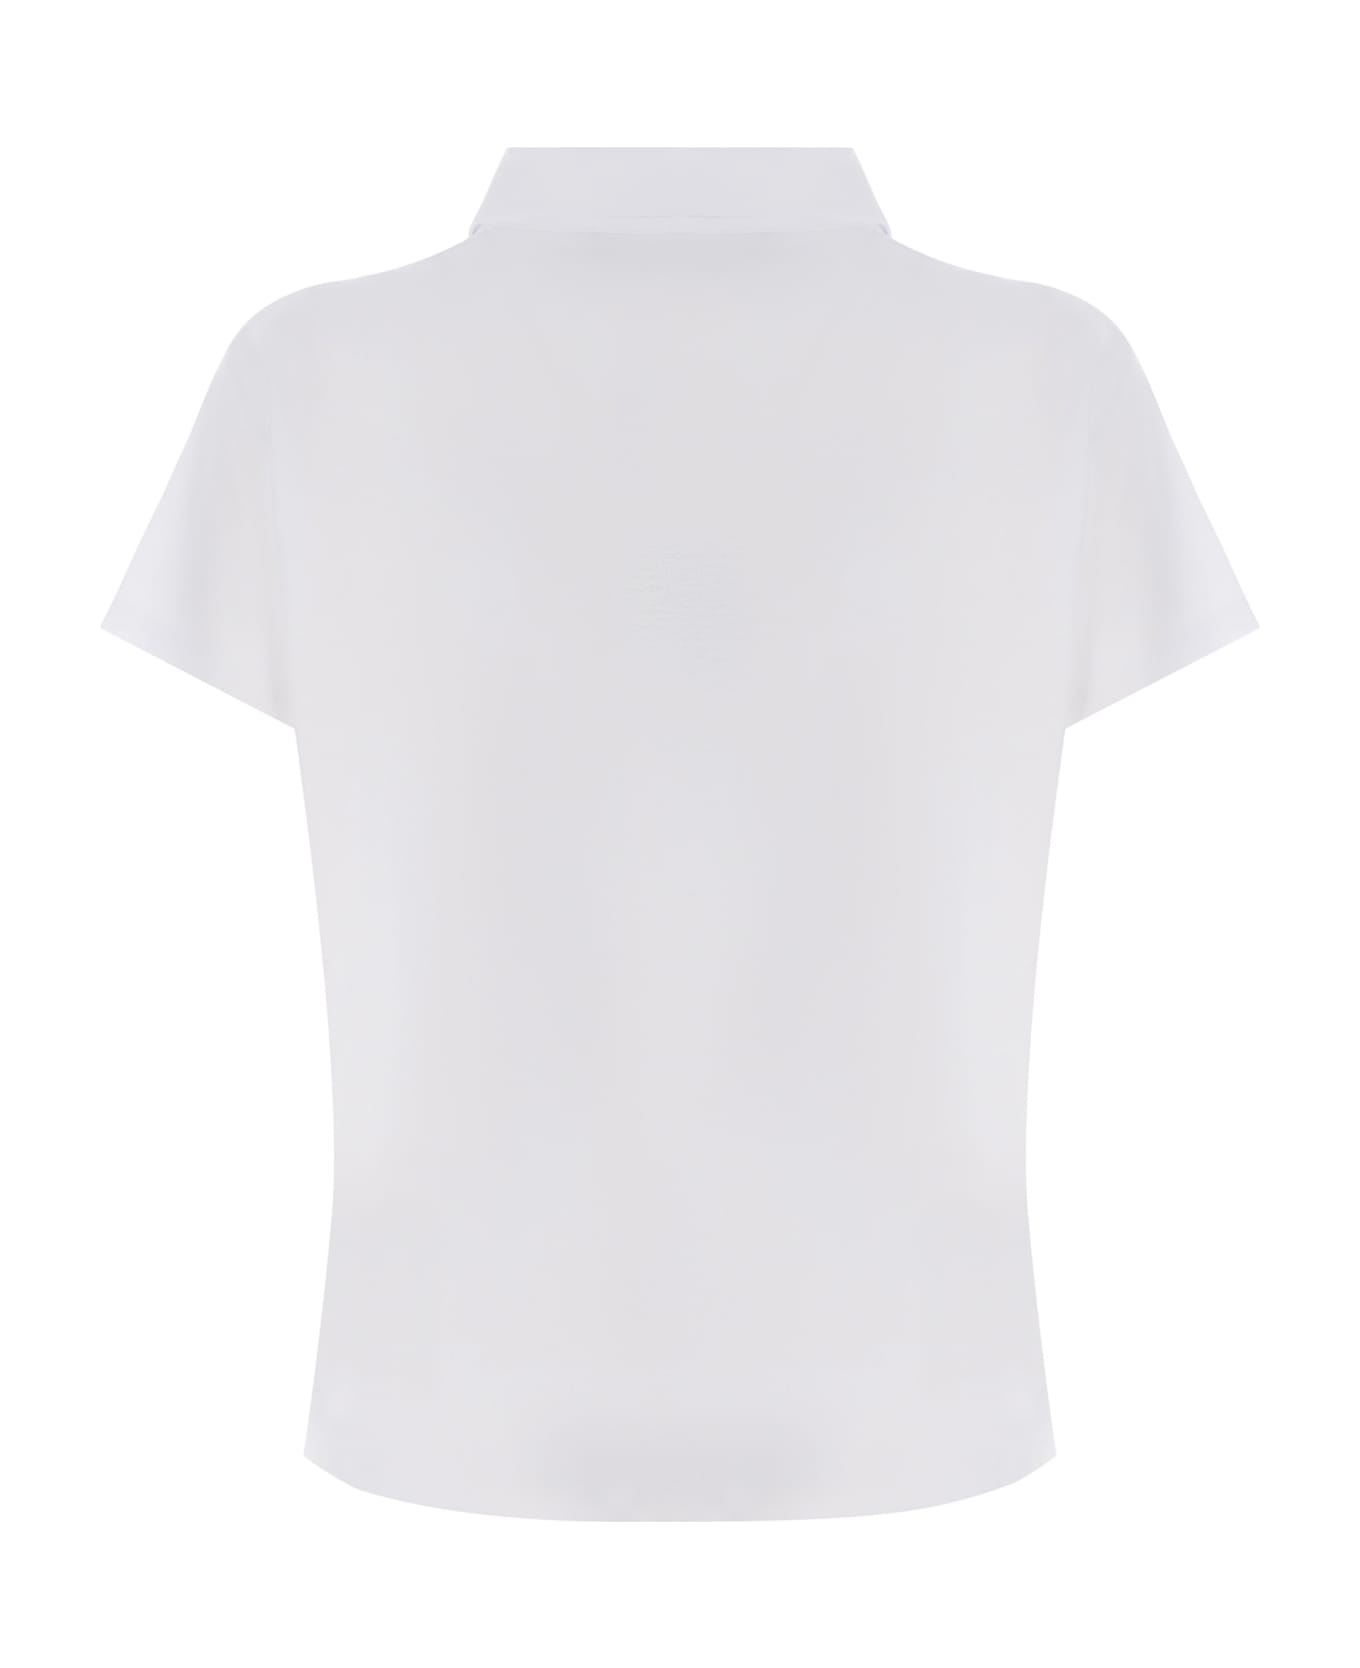 Fay Polo Shirt Fay Made Of Piquet - Bianco ポロシャツ